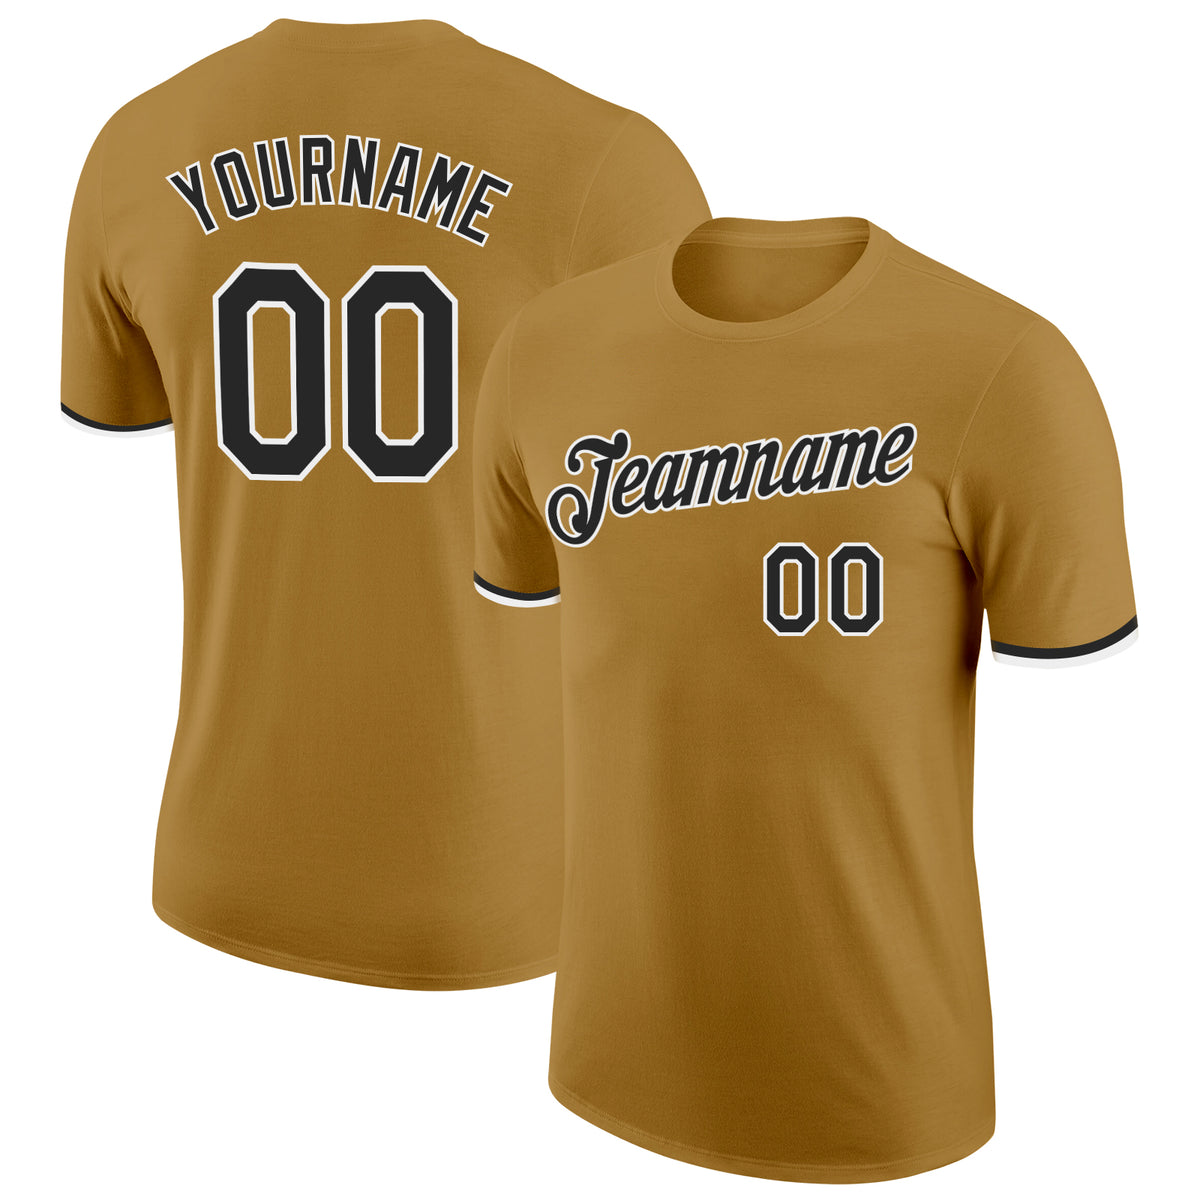 Design Cheap Baseball Uniforms T Shirt Custom Blank Baseball